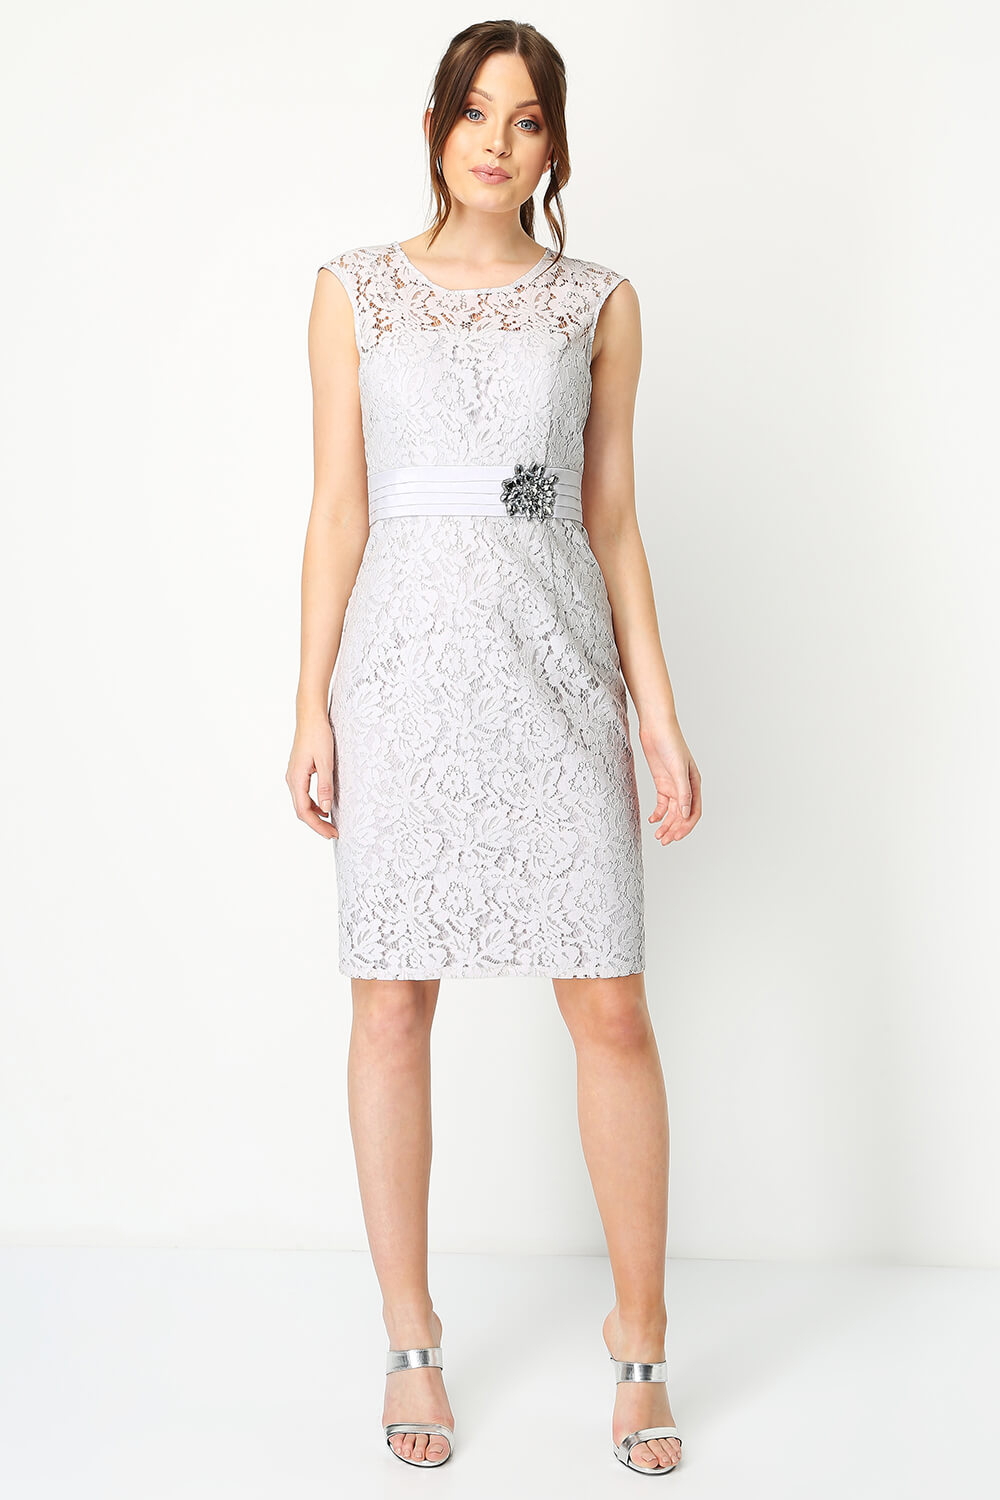 Silver Lace Embellished Trim Dress, Image 2 of 5